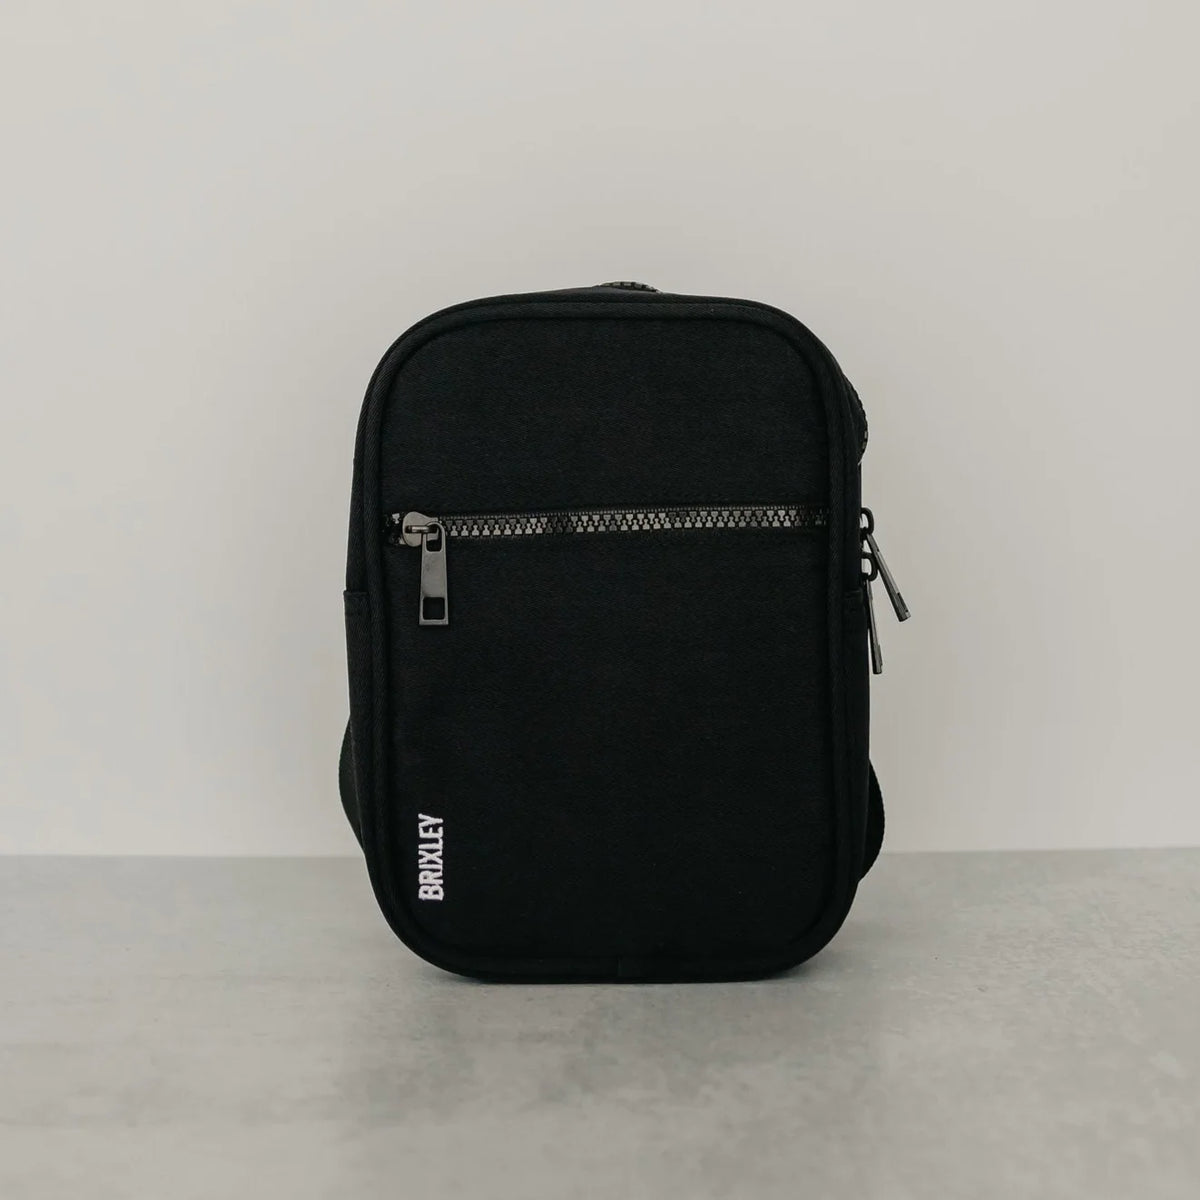 Brixley Bag - Medium Size - Jet Black Nylon